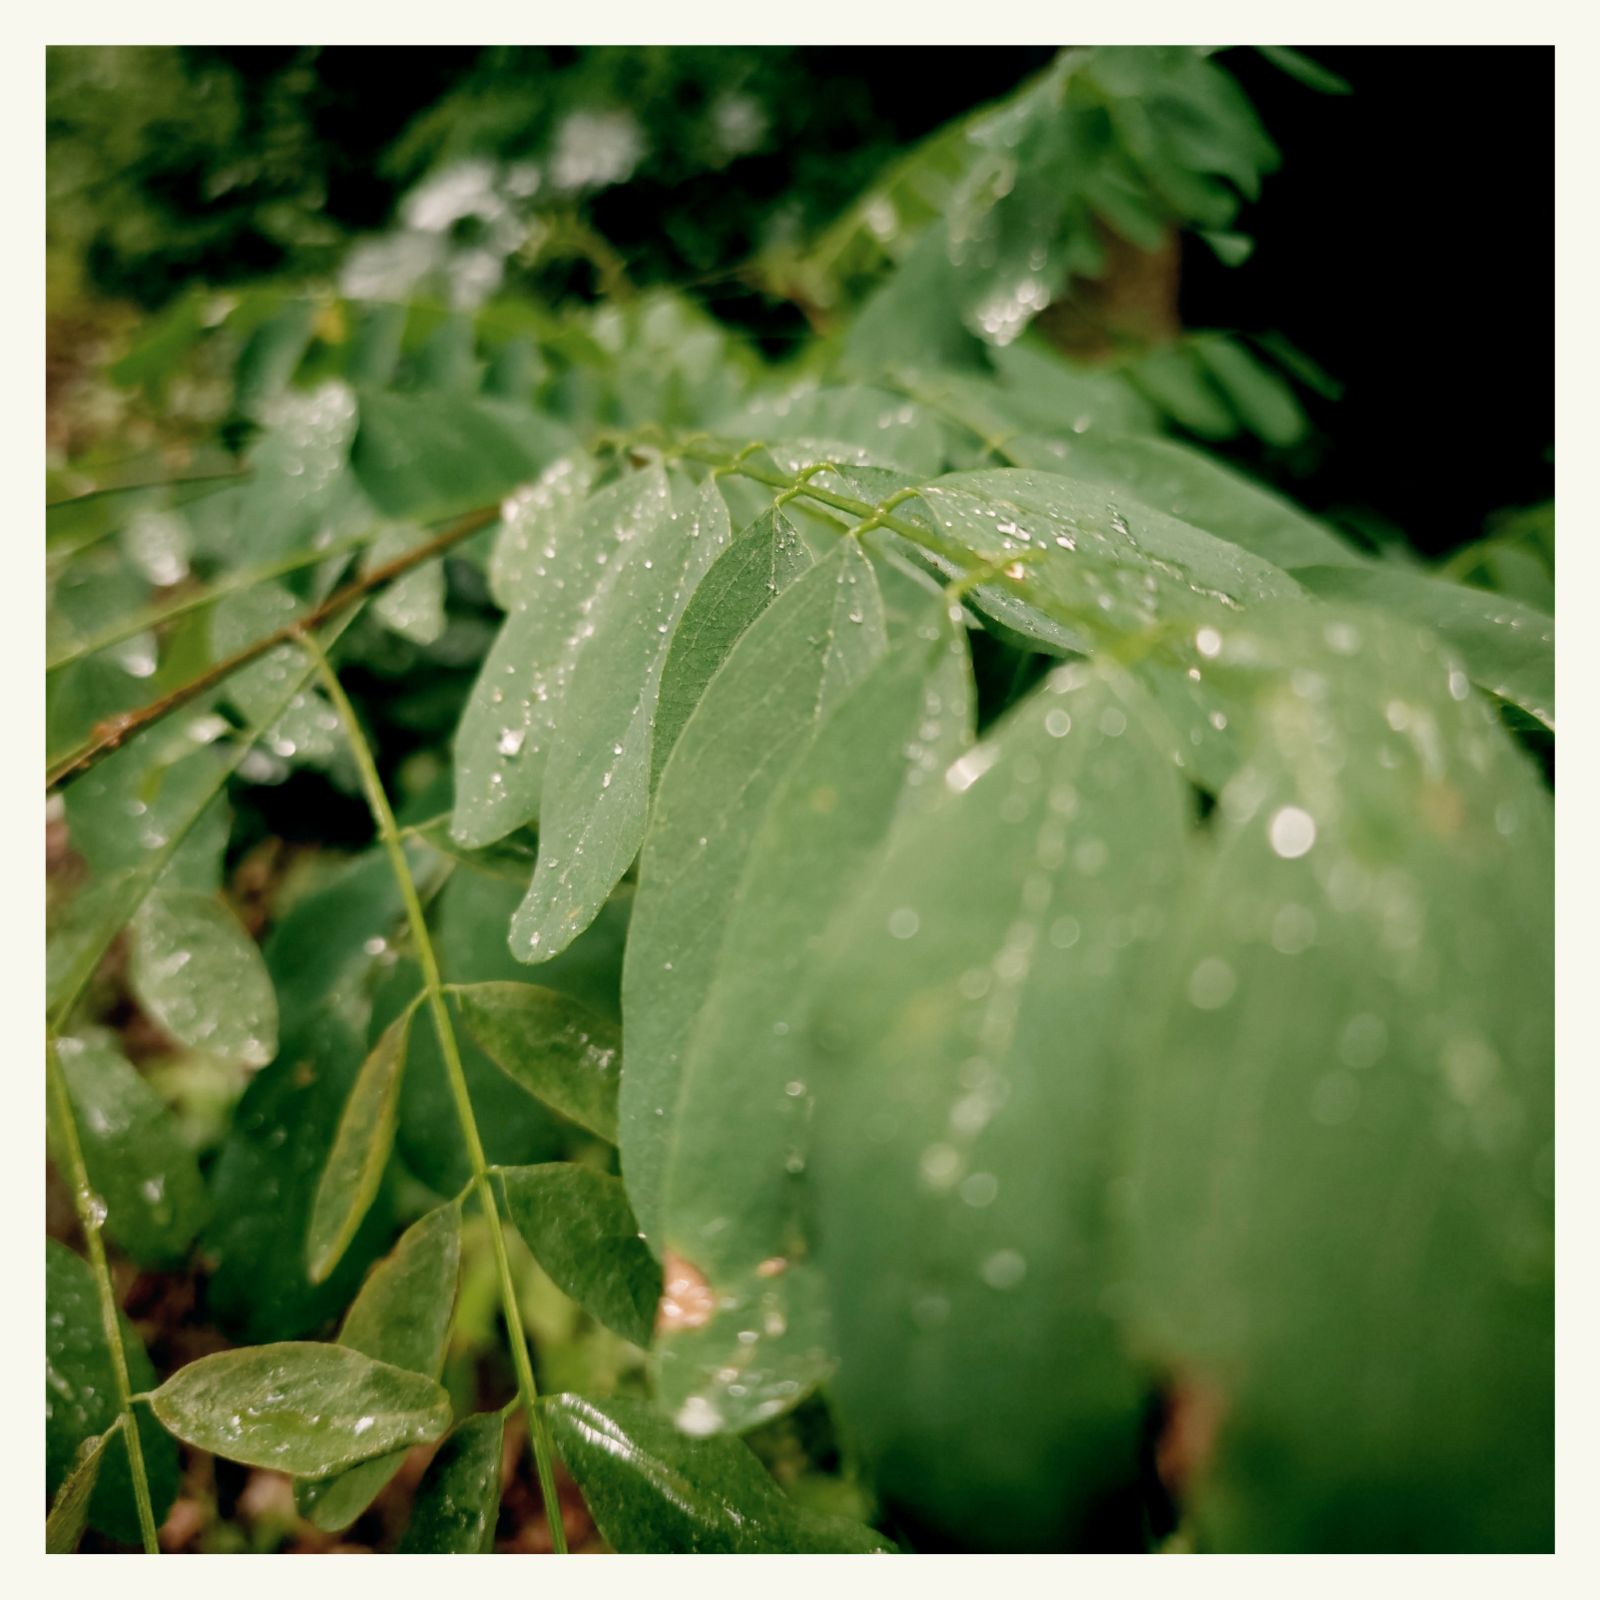 Raindrops on green leaves.